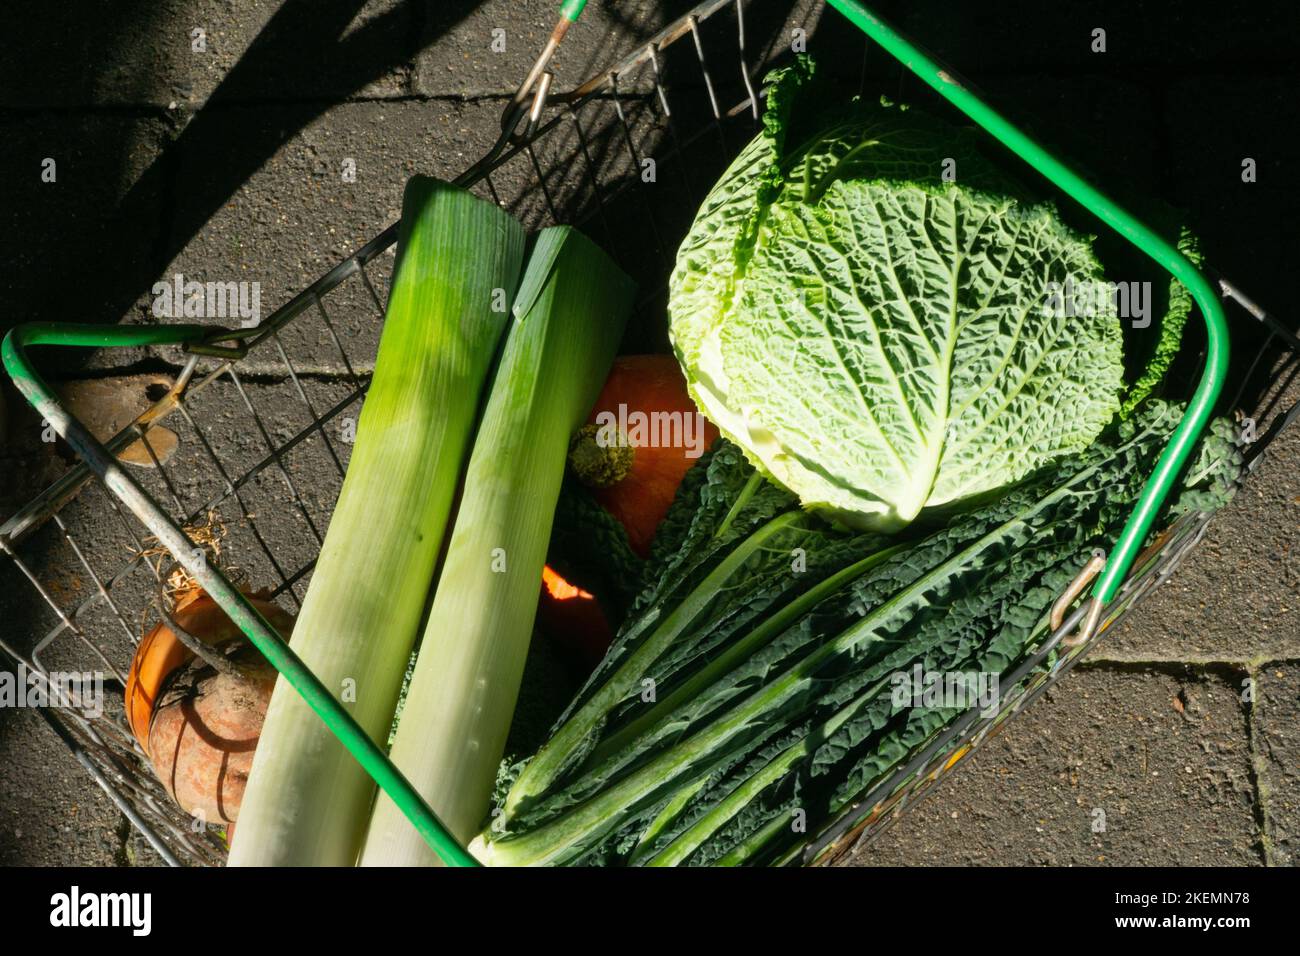 London, 12 November 2022: sunlight illuminates a shopping basket of fresh vegetables at Venn Street outdoor market in Clapham. Anna Watson/Alamy Stock Photo